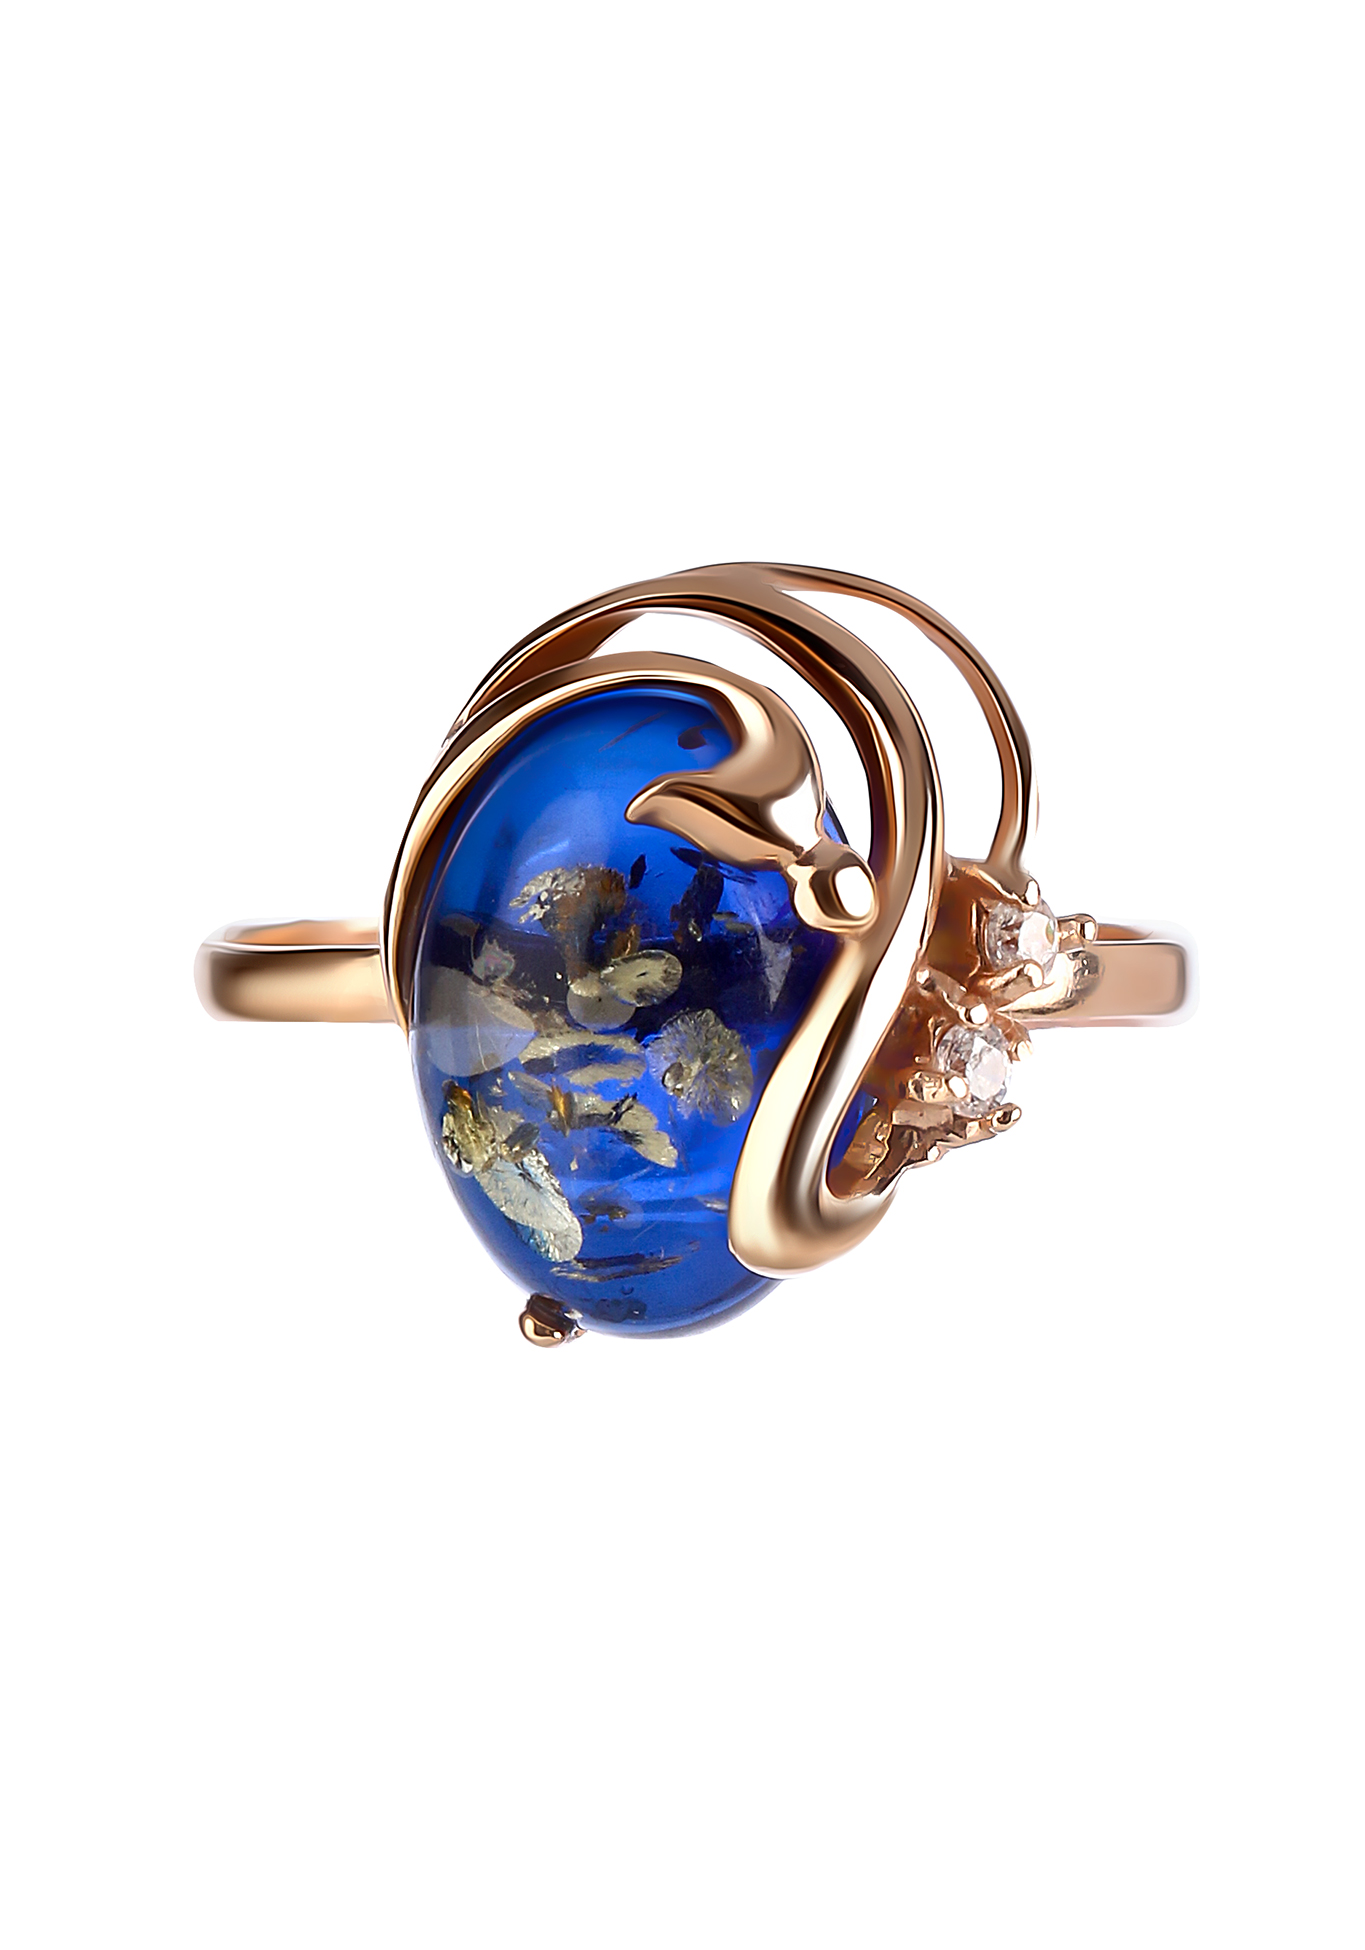 Серебряное кольцо "Синяя птица" Янтарная волна, цвет синий, размер 17 перстень - фото 2